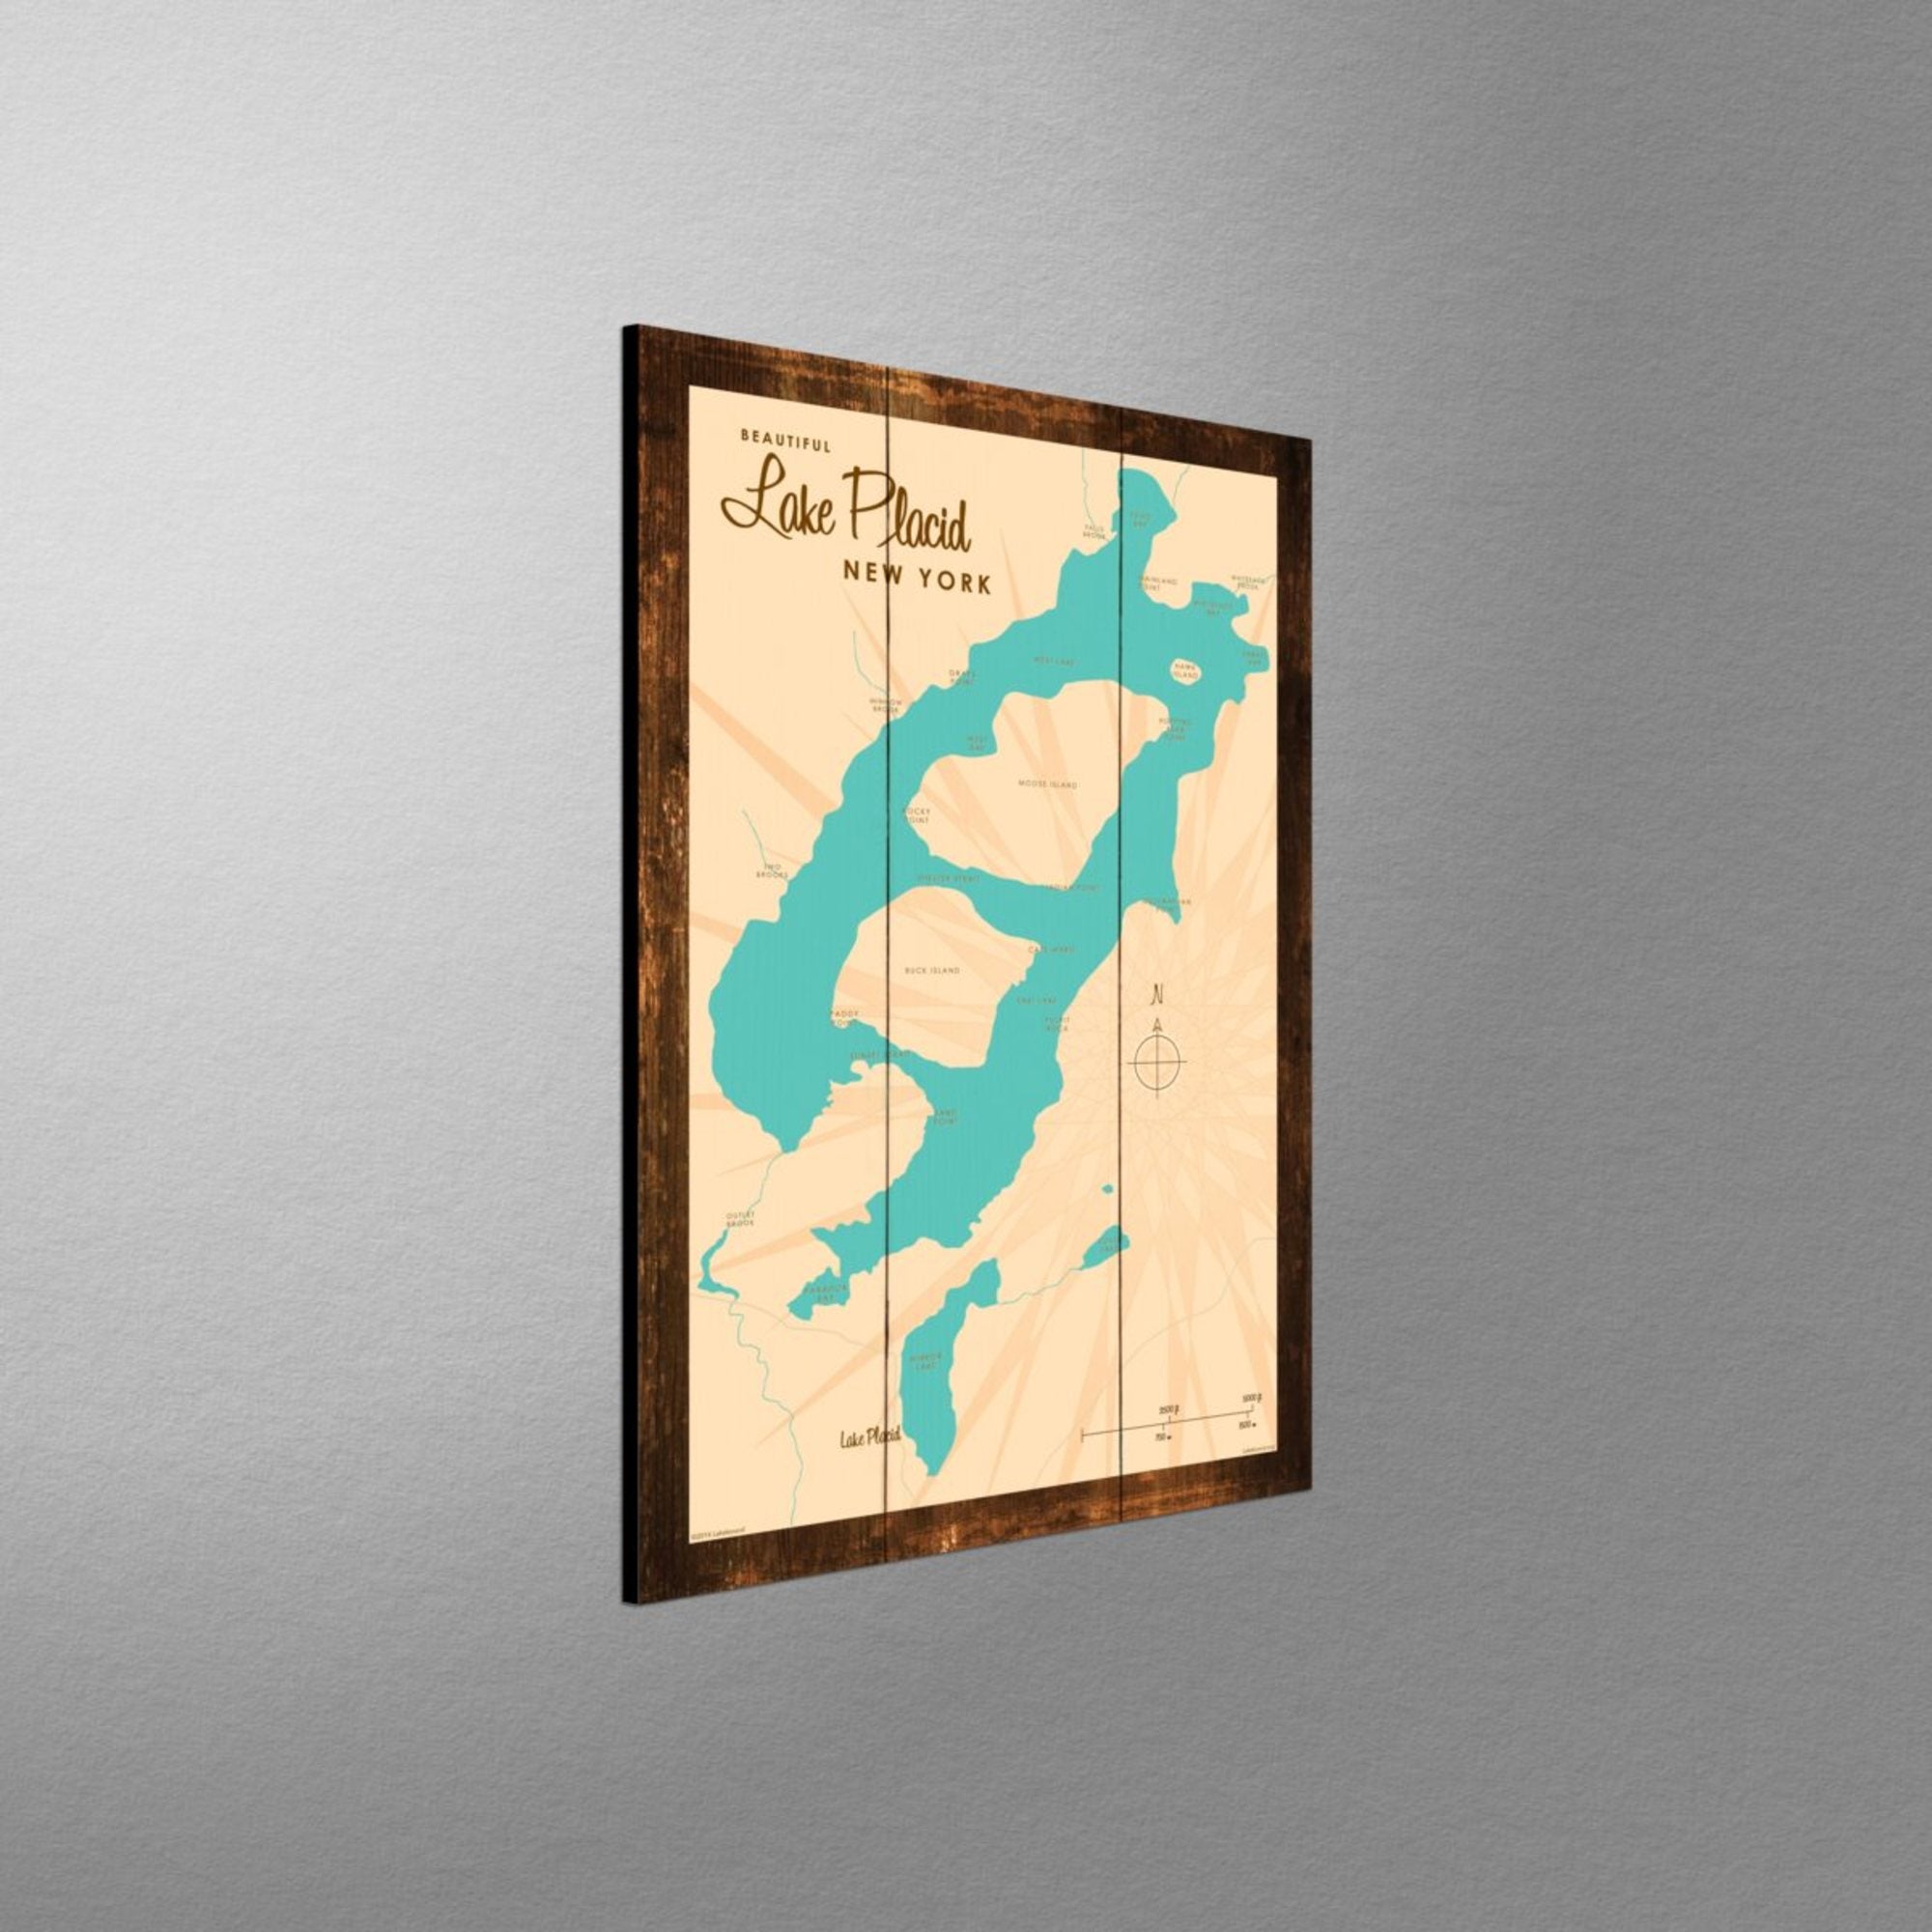 Lake Placid New York, Rustic Wood Sign Map Art